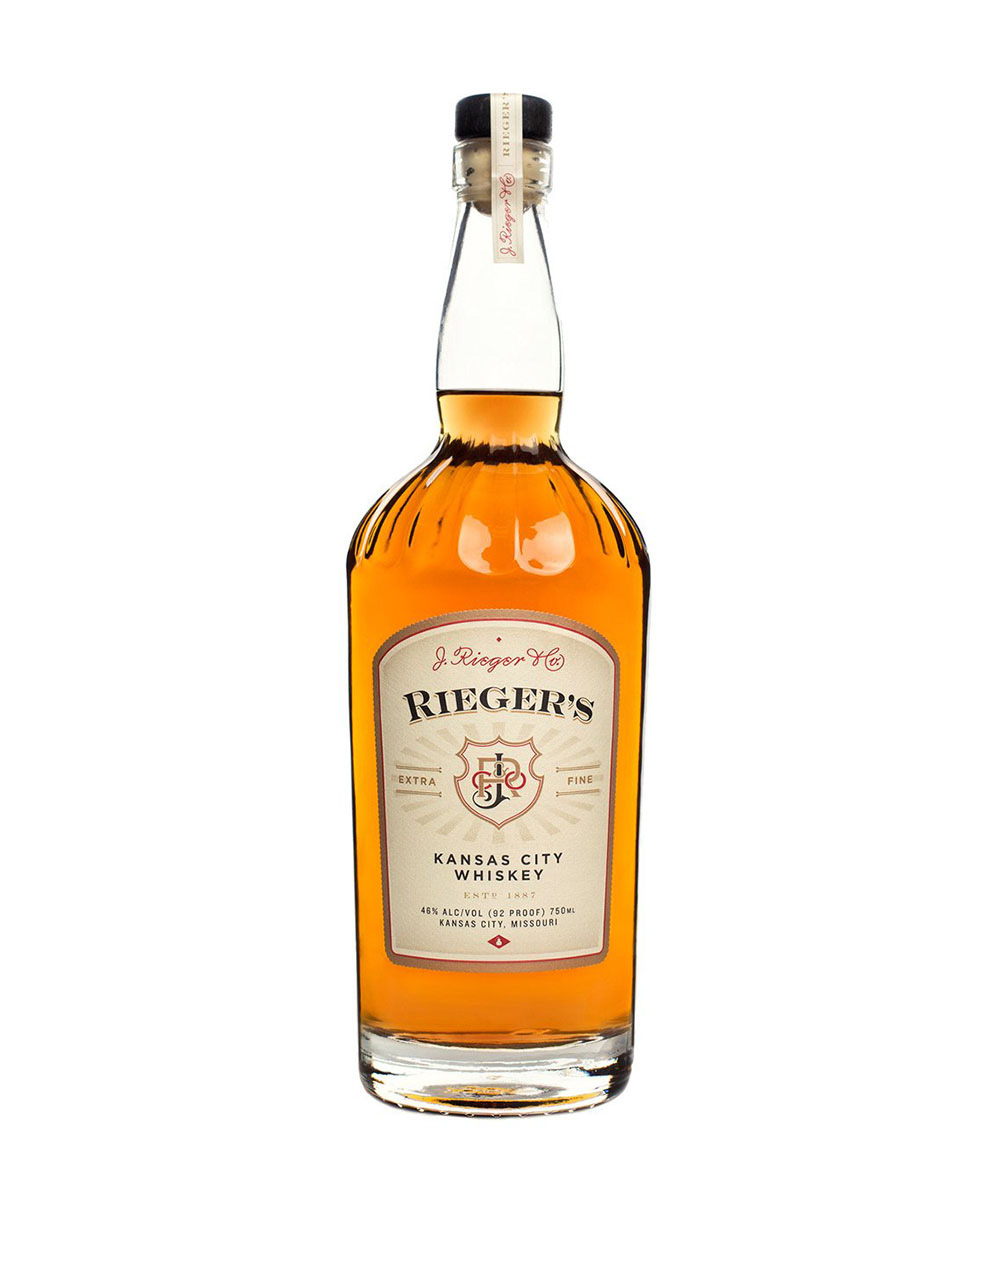 The Balvenie The Sweet Toast of American Oak 12 Year Old Single Malt Scotch Whisky